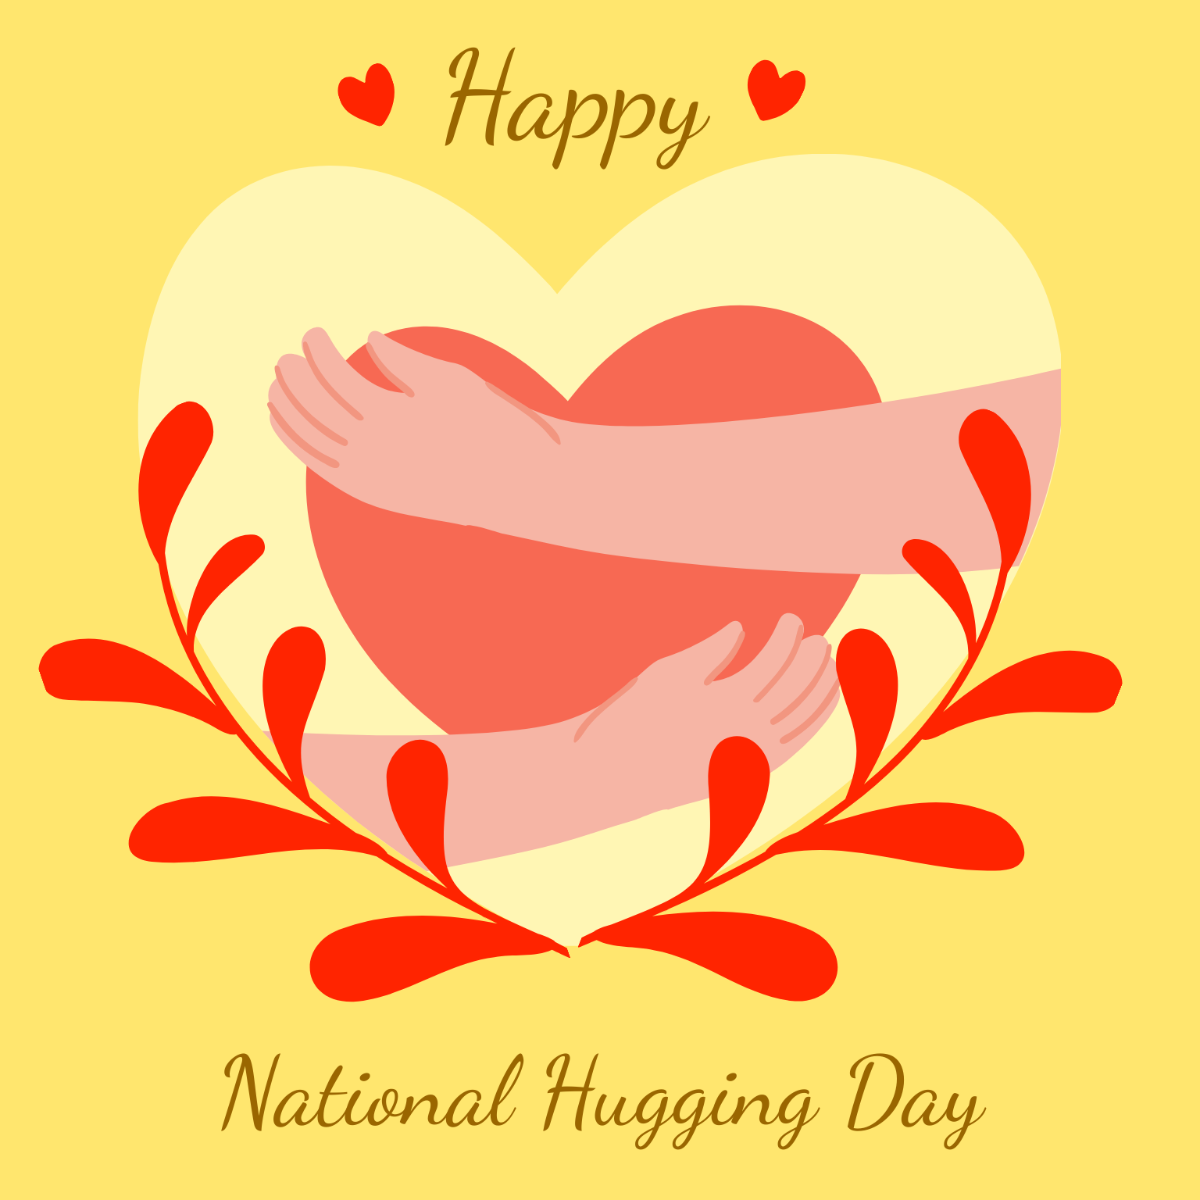 Happy National Hugging Day Vector